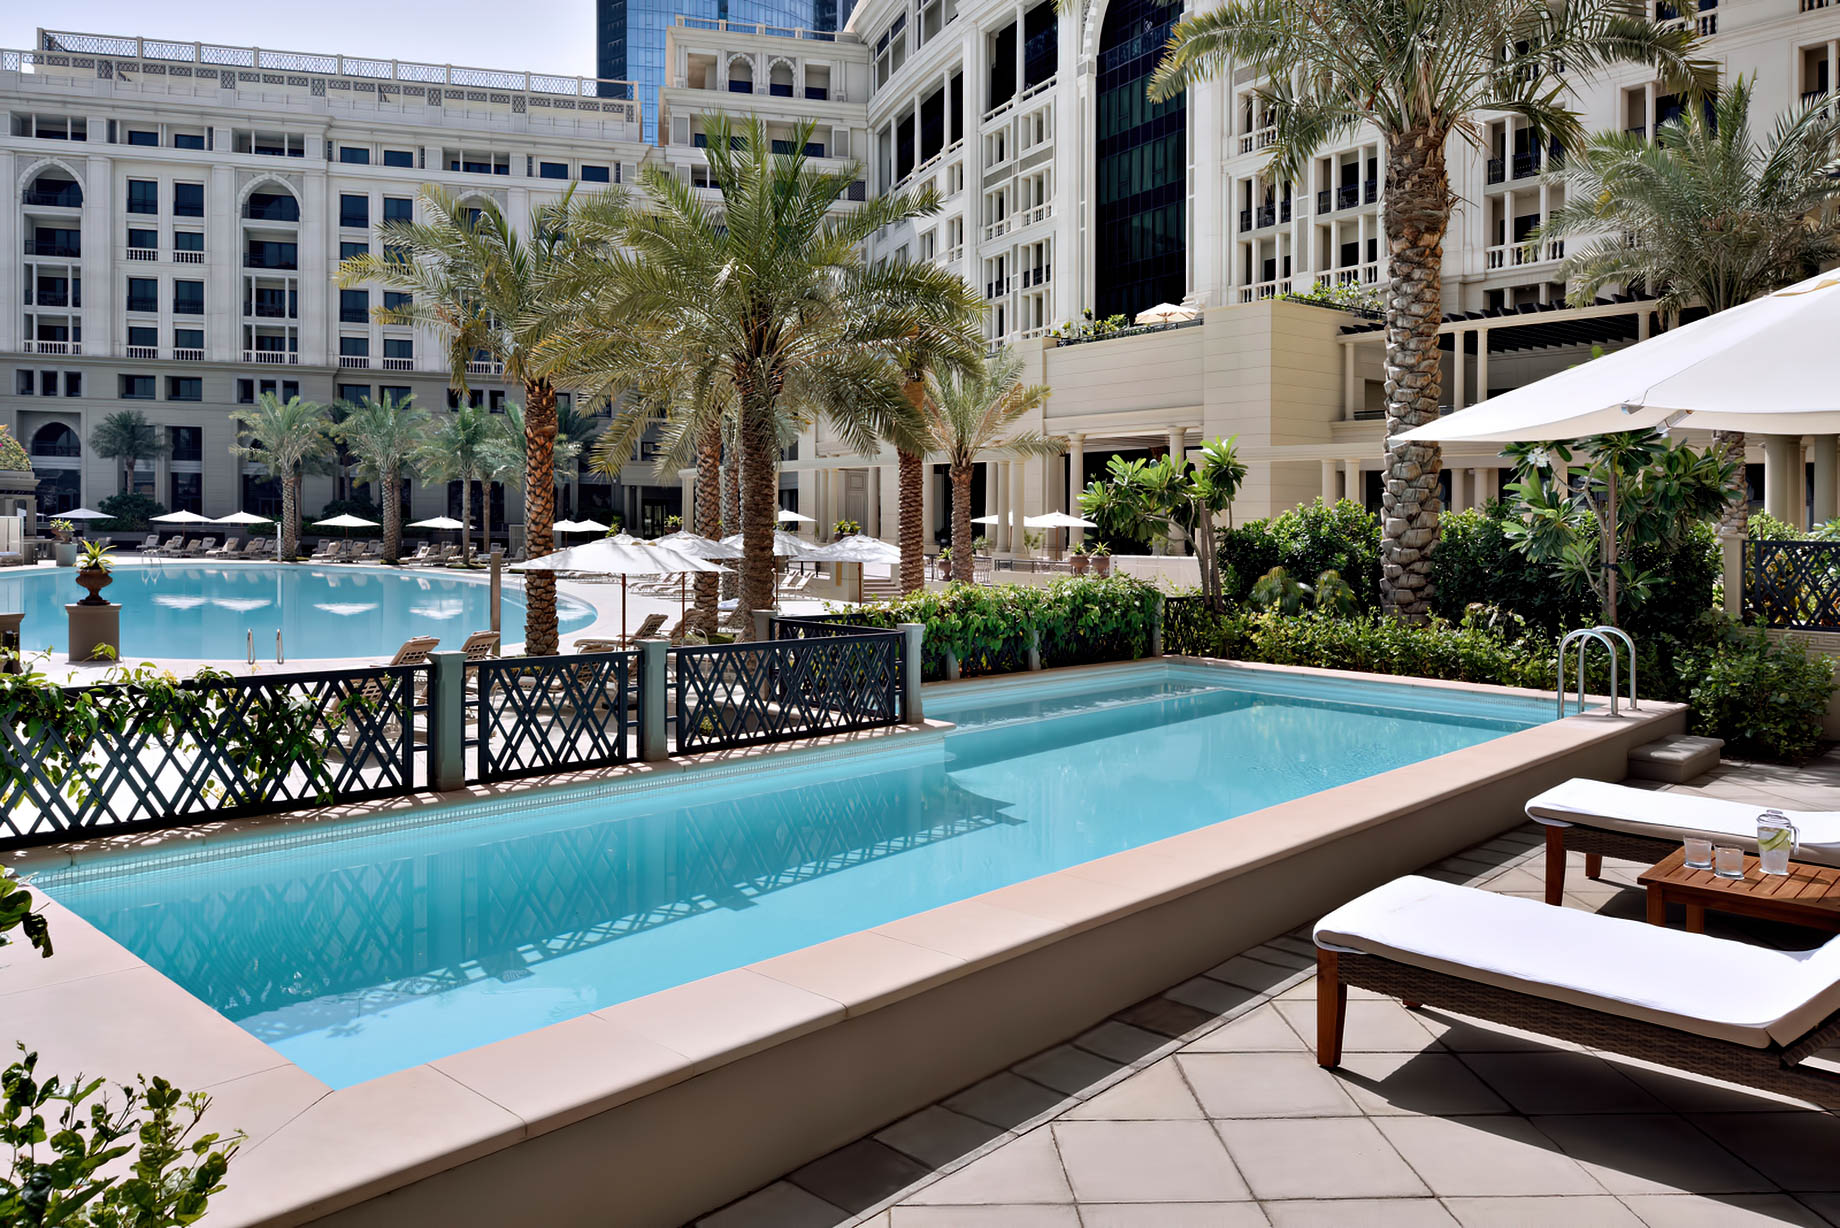 Palazzo Versace Dubai Hotel – Jaddaf Waterfront, Dubai, UAE – 3 Bedroom Residence Pool